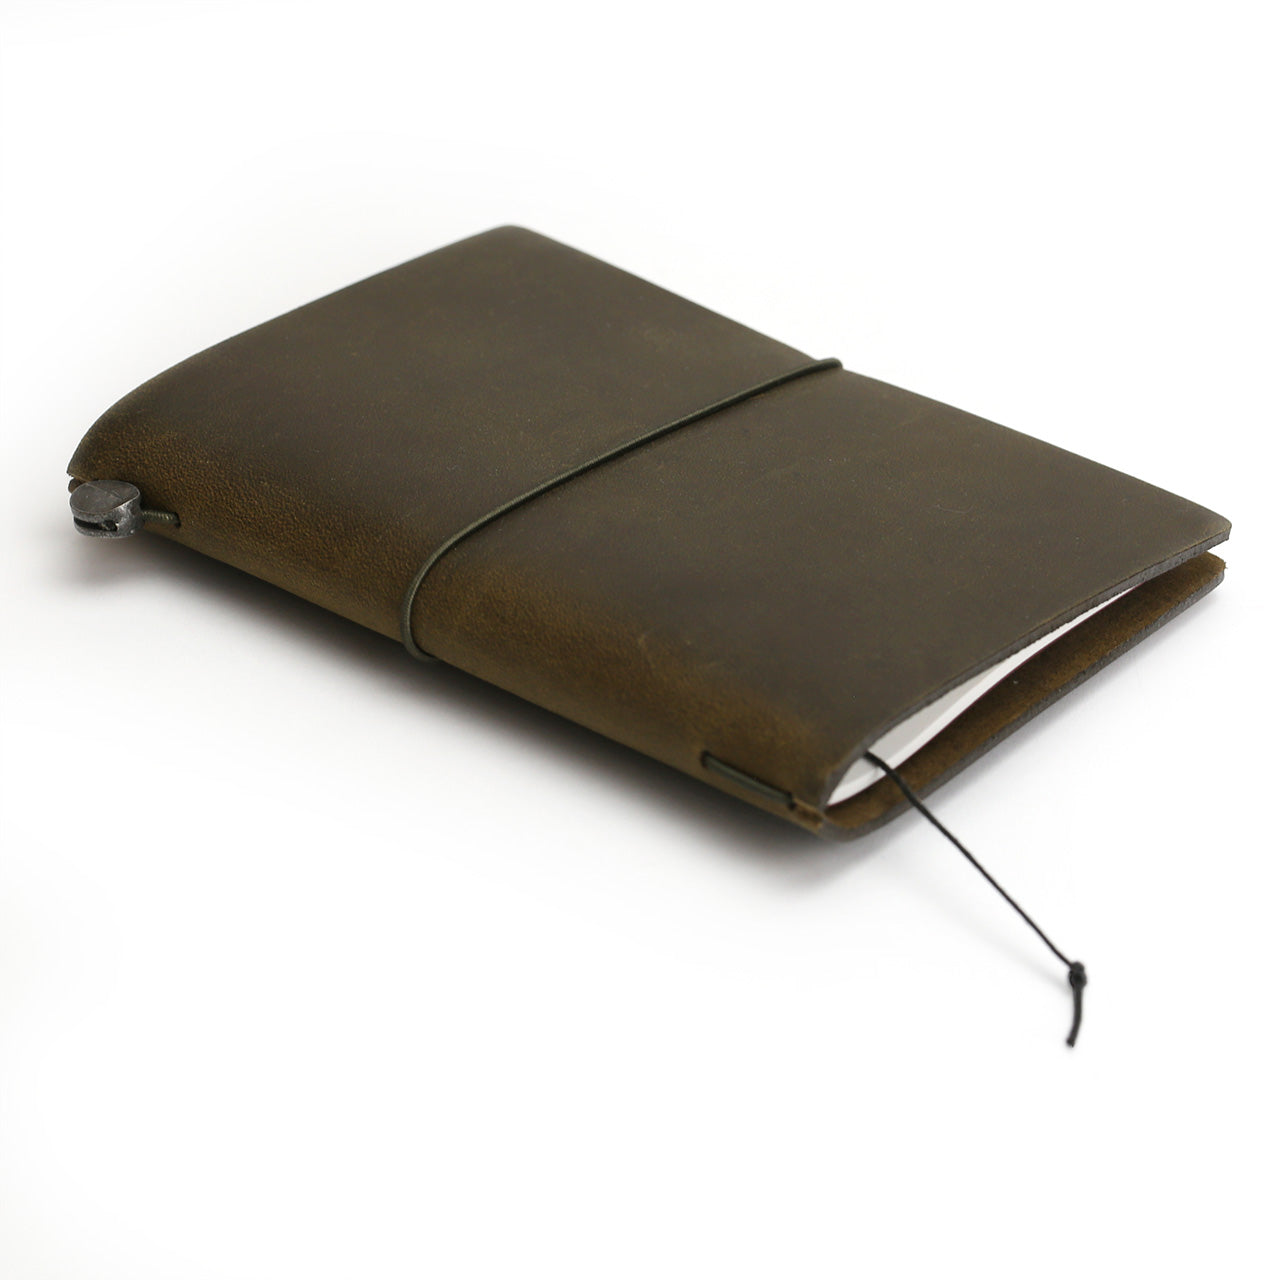 Camel Passport sized notebook cover, three-quarter angle